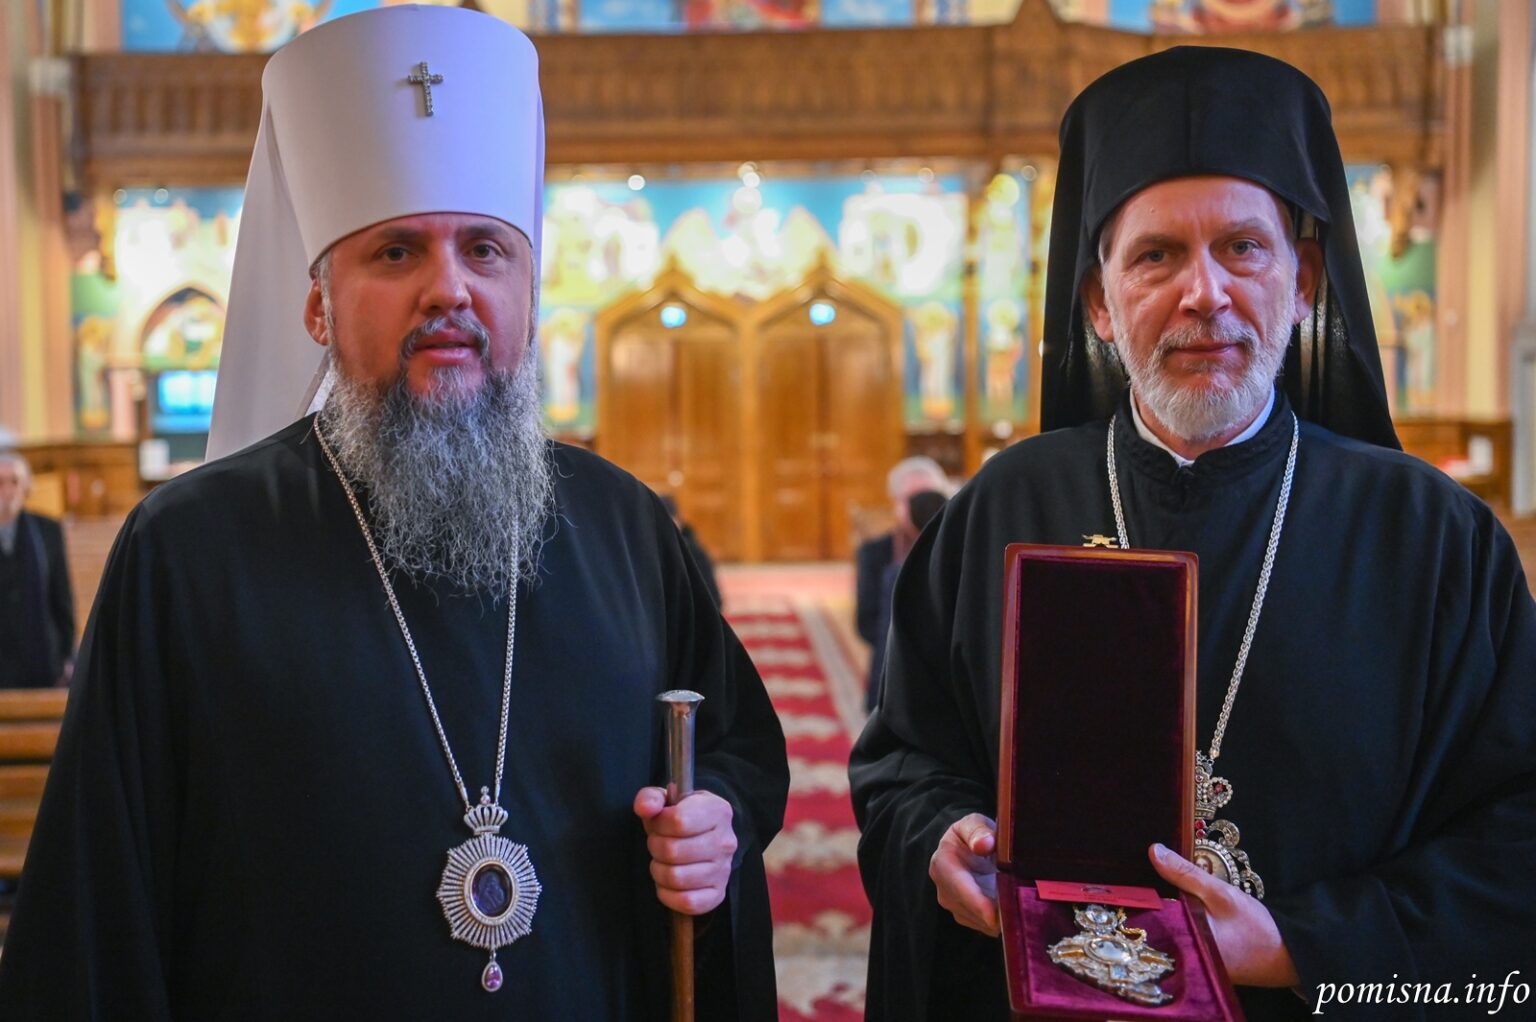 Metropolitan Epiphaniy of Kyiv visited the Metropolis of Sweden